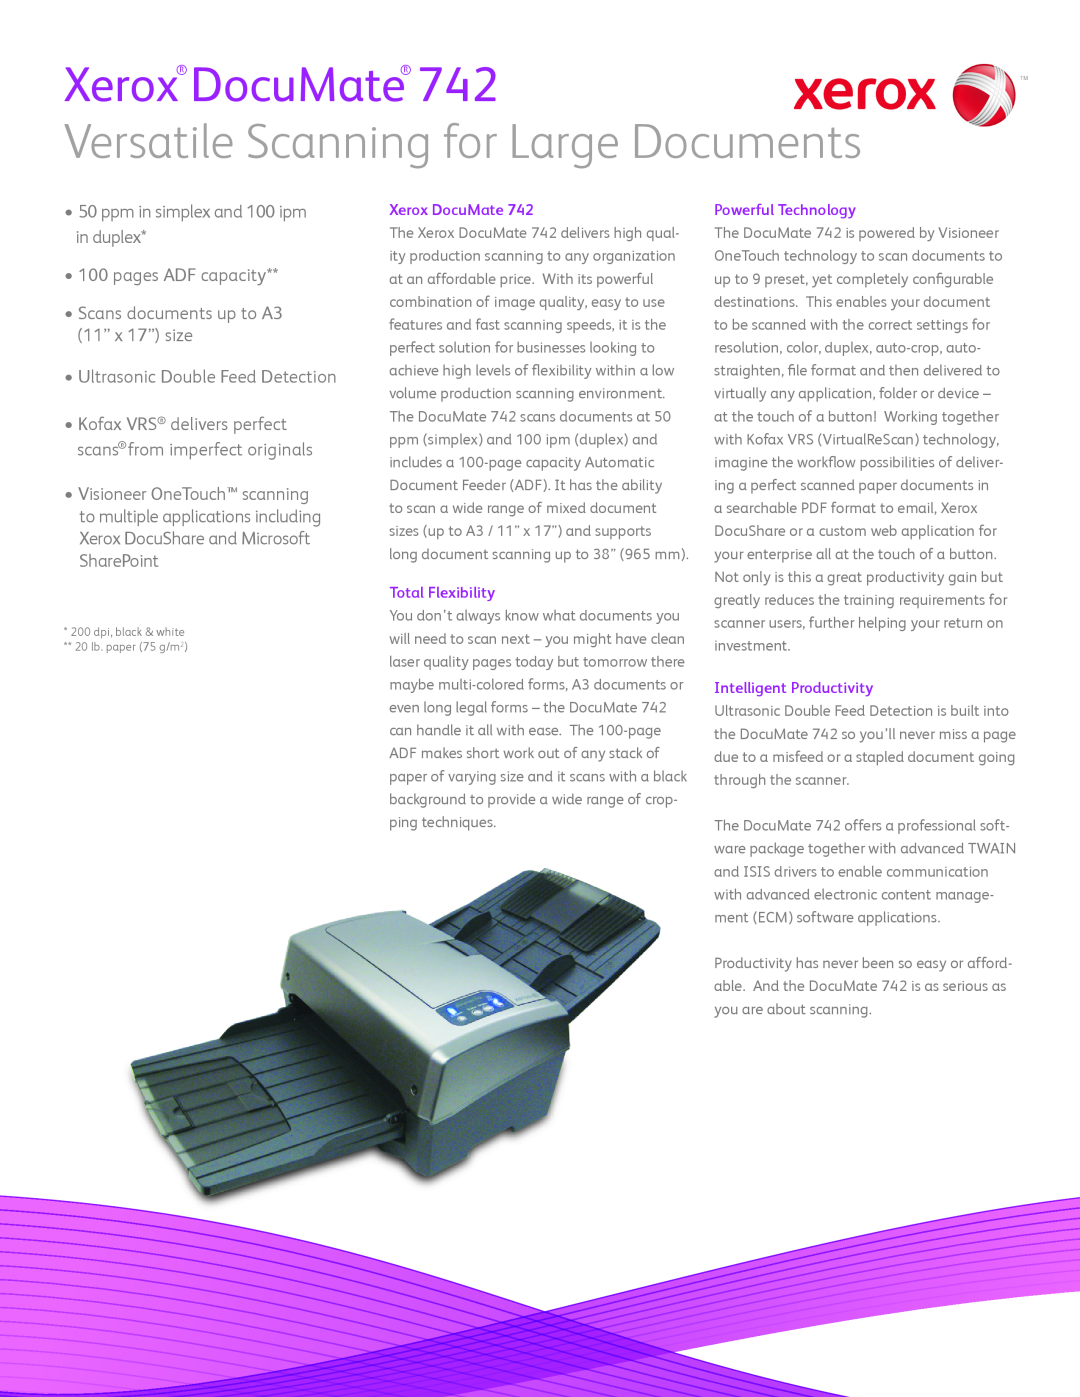 Xerox XDM7425DWU manual Xerox DocuMate, Versatile Scanning for Large Documents, ppm in simplex and 100 ipm in duplex 